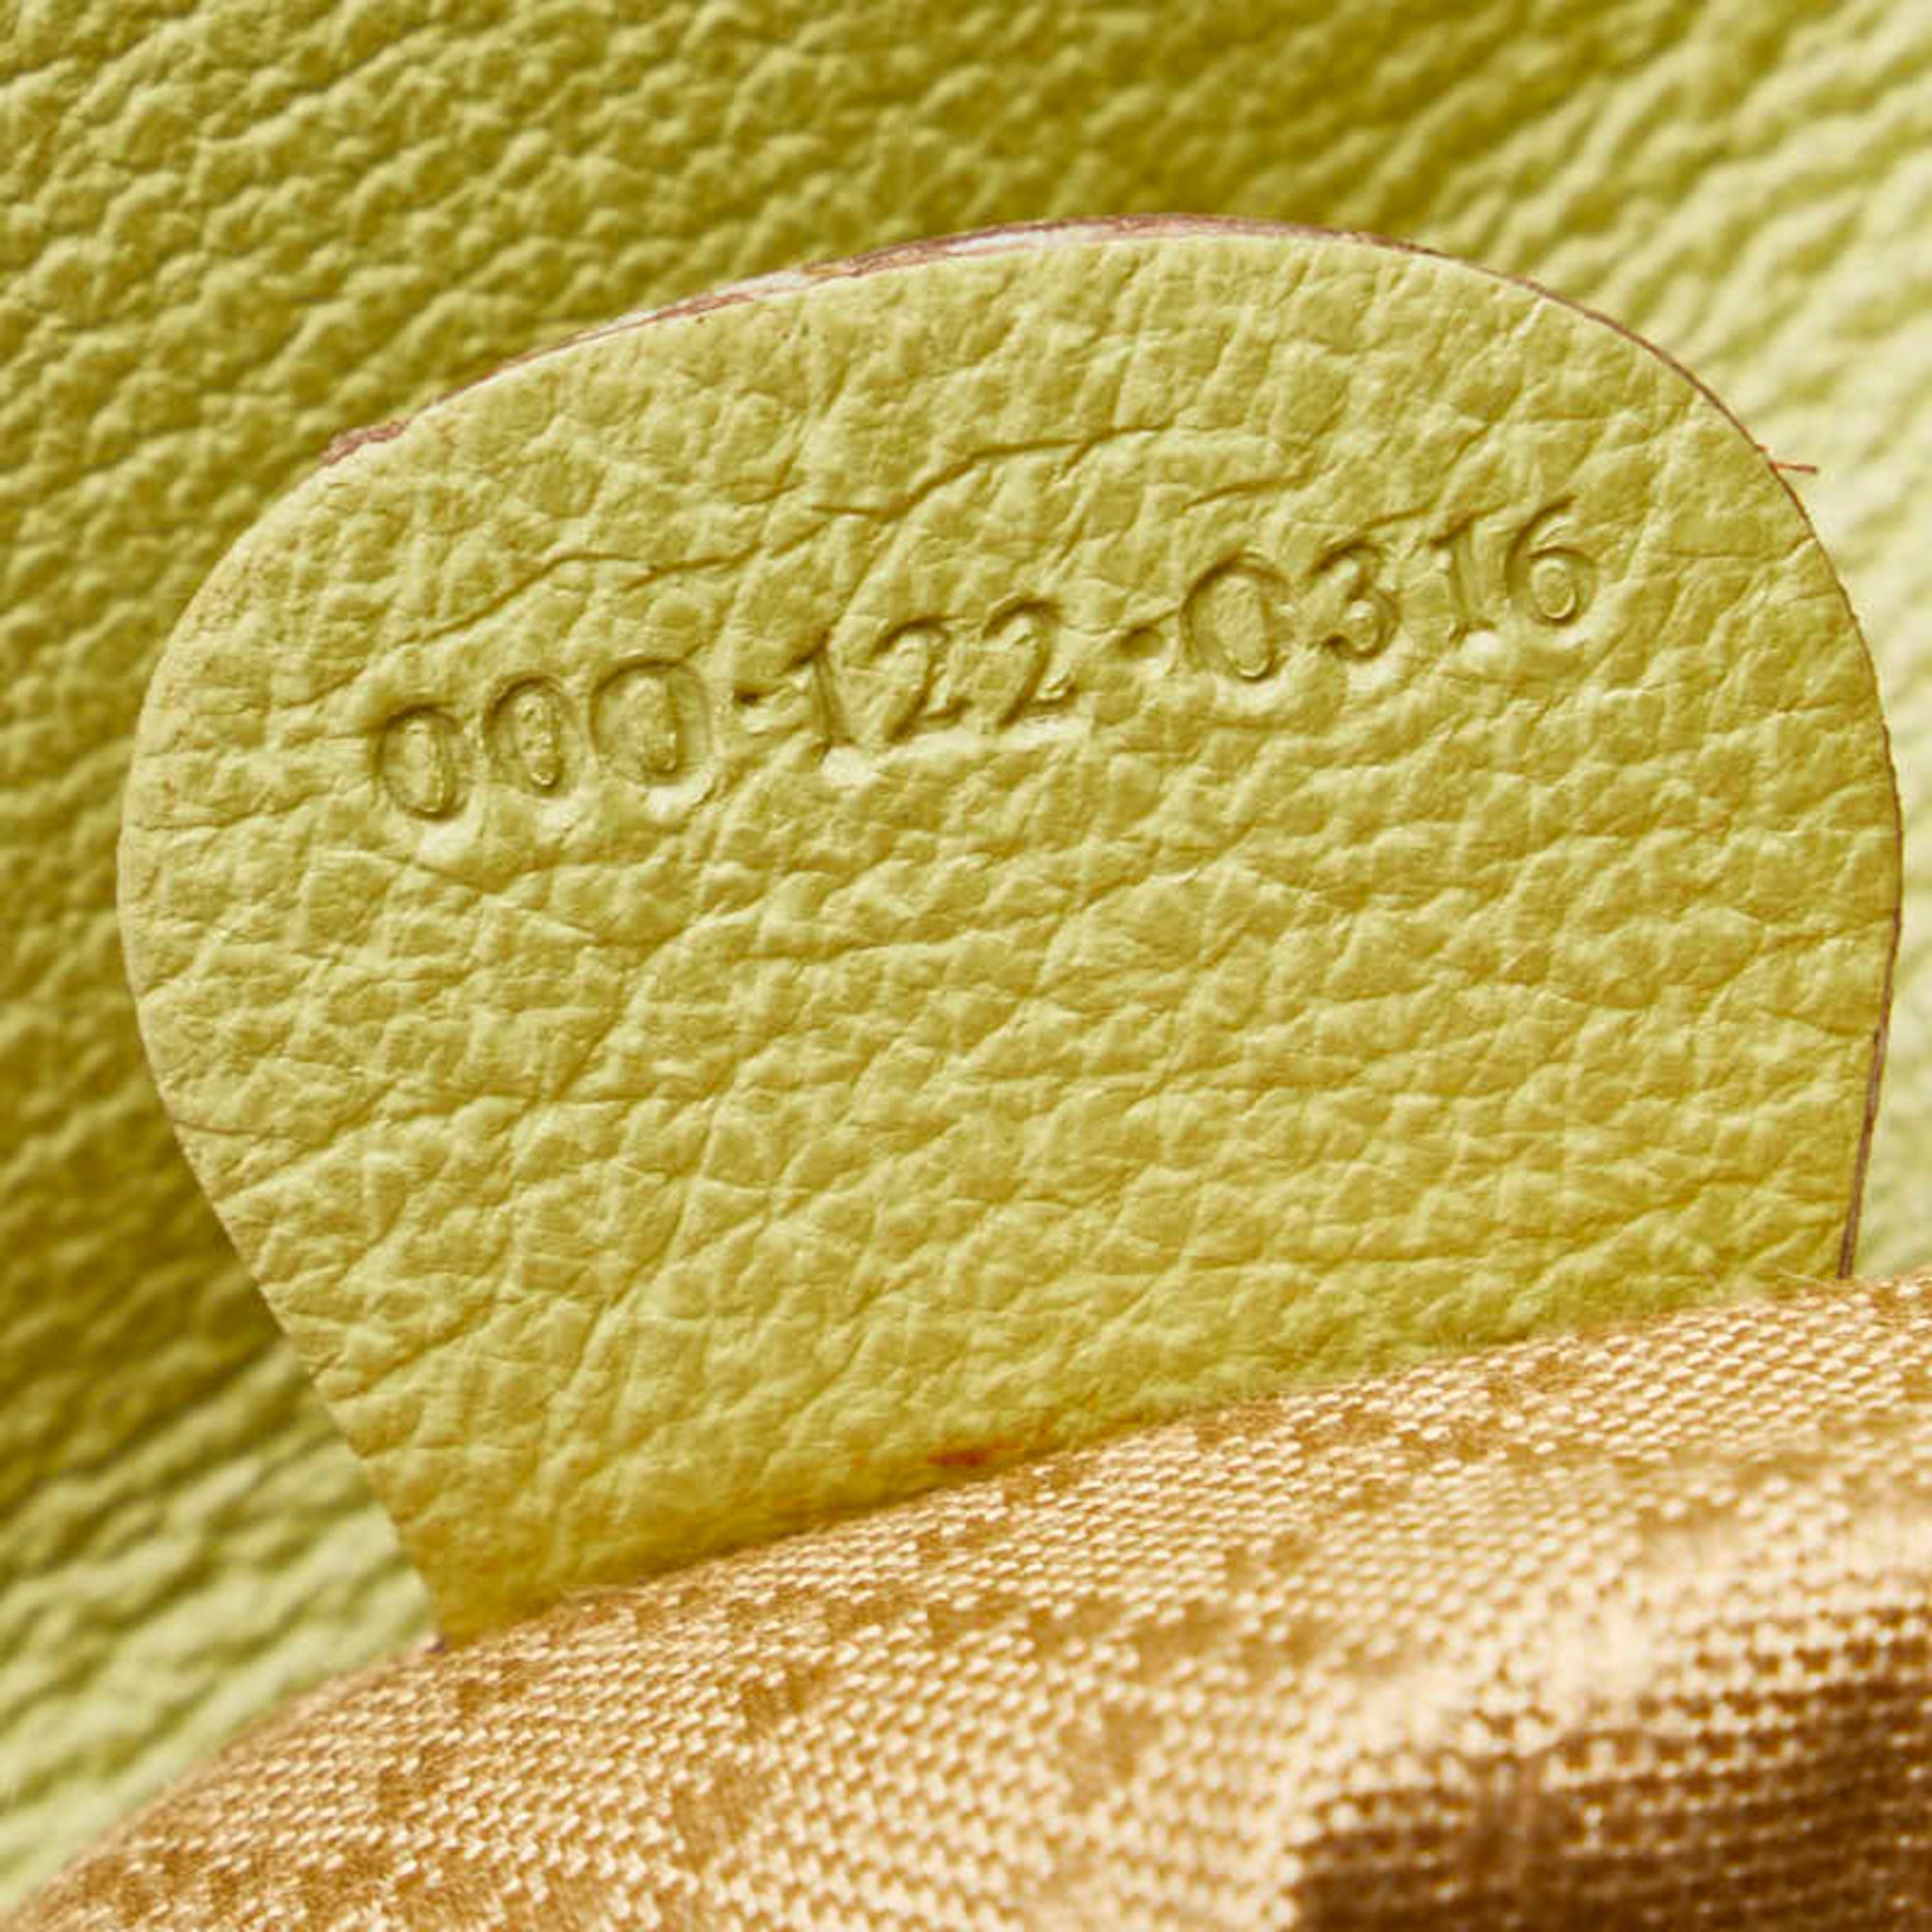 Gucci 1220316 Women's Bamboo Handbag,Shoulder Bag Green